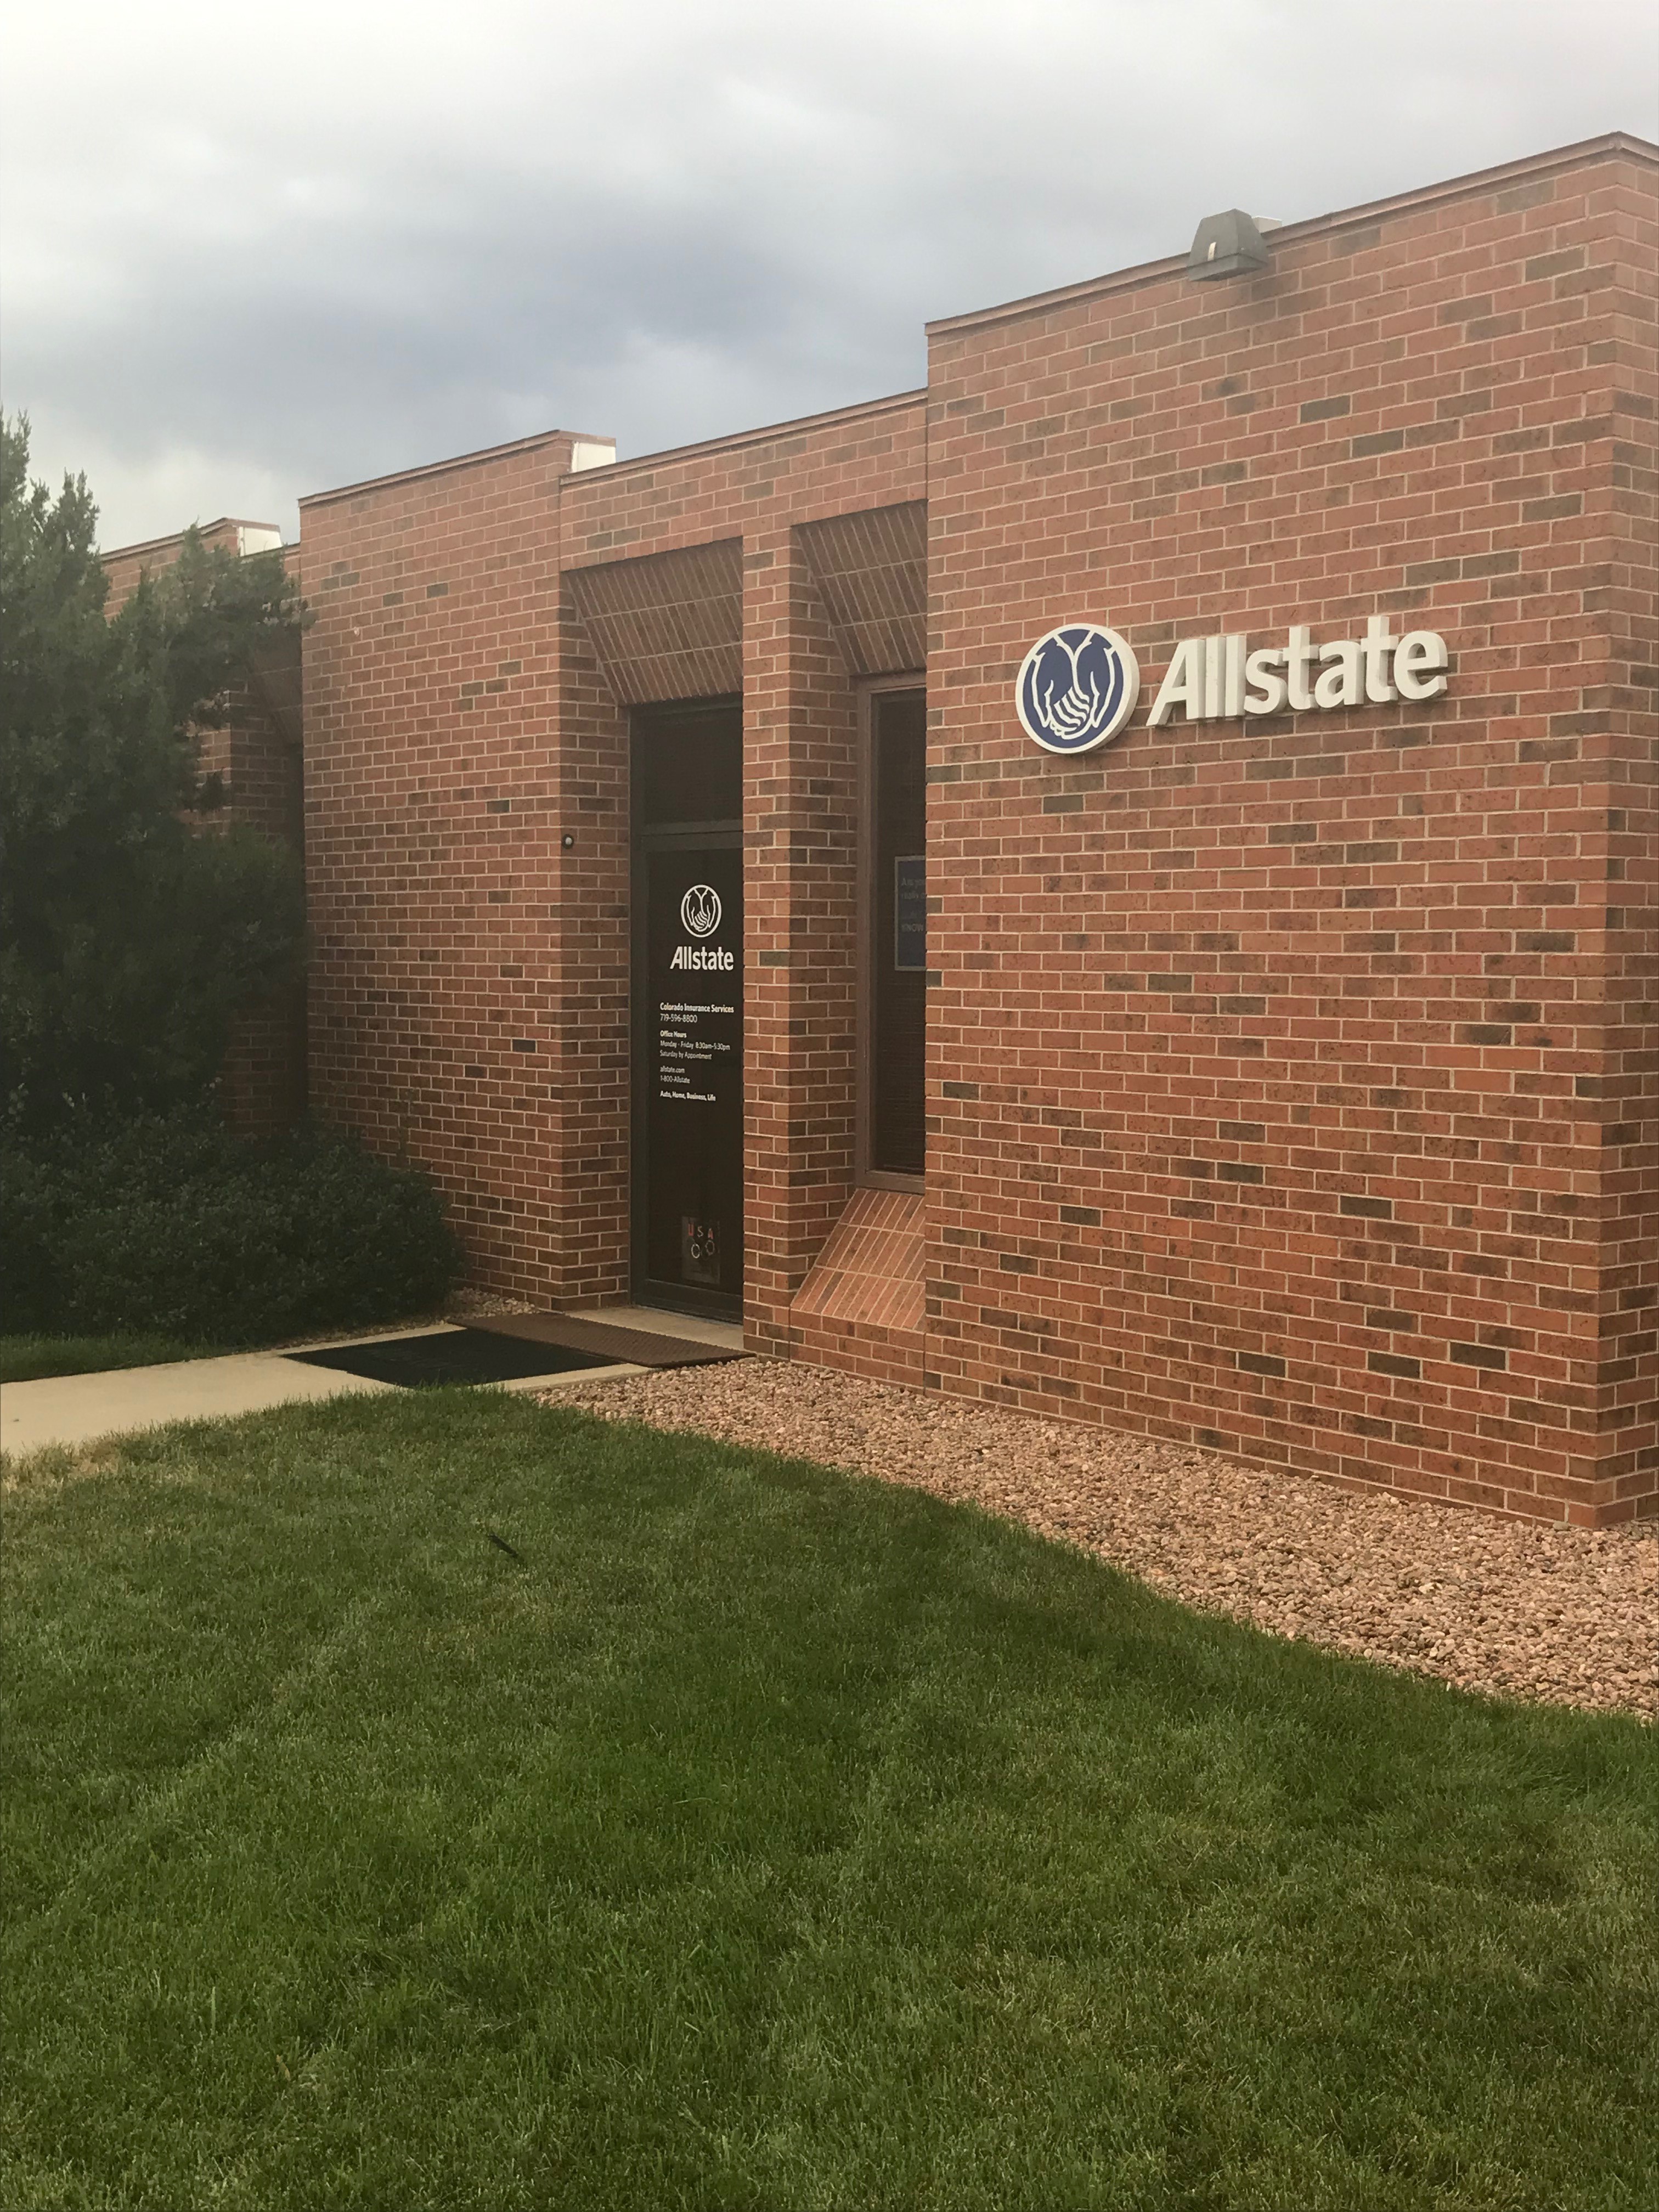 Colorado Insurance Services: Allstate Insurance Photo